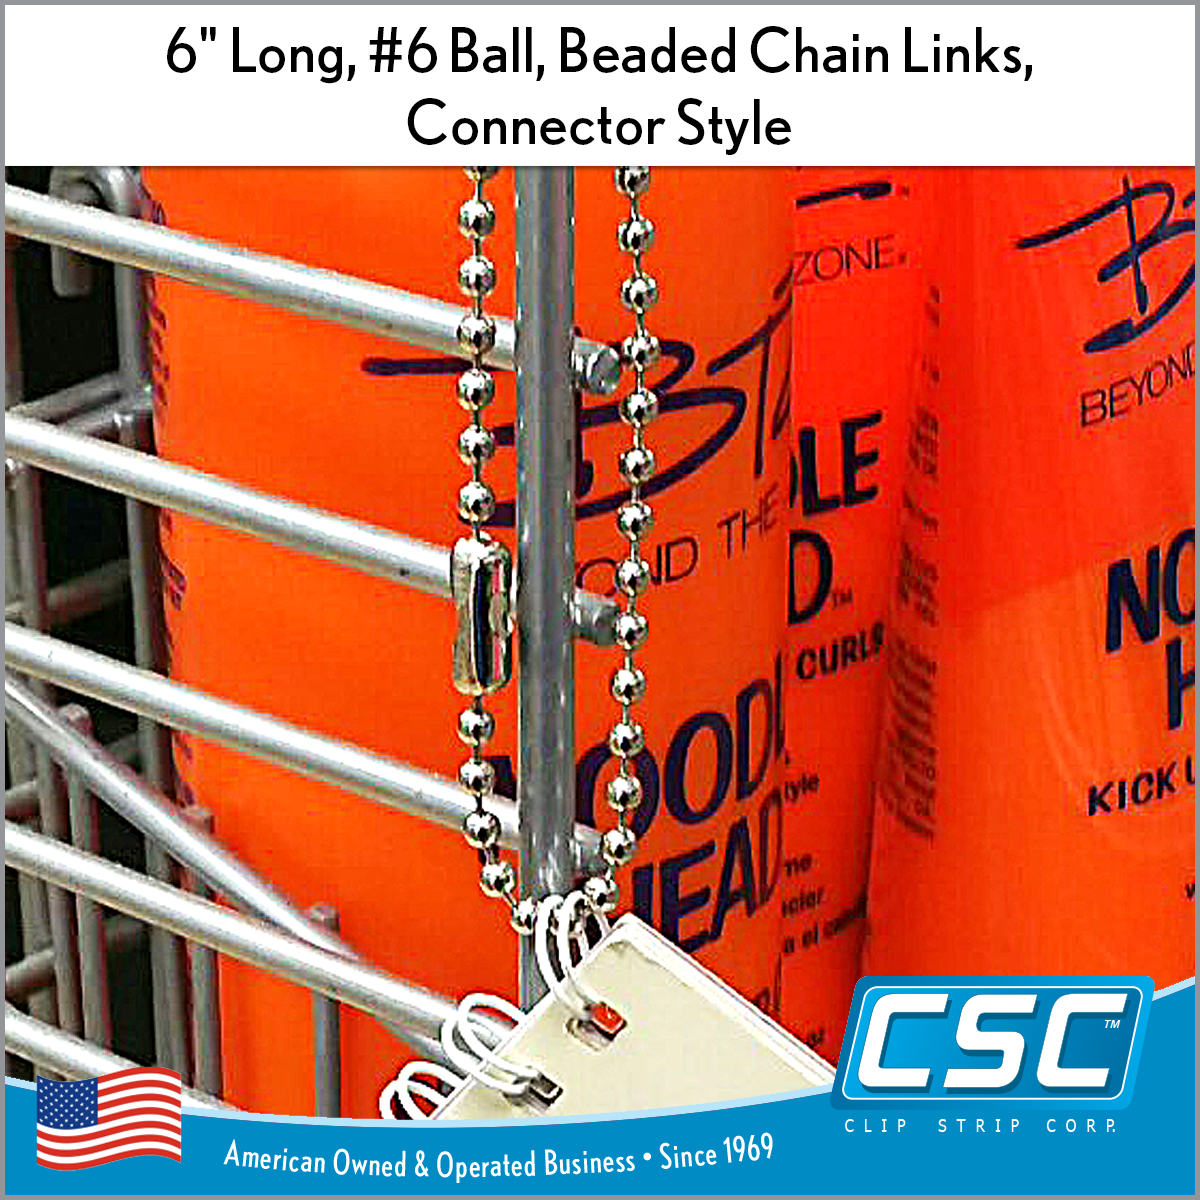 Beaded Ball Chain Links, Connector Style, 6 Long, #3 Ball, BC-3CS